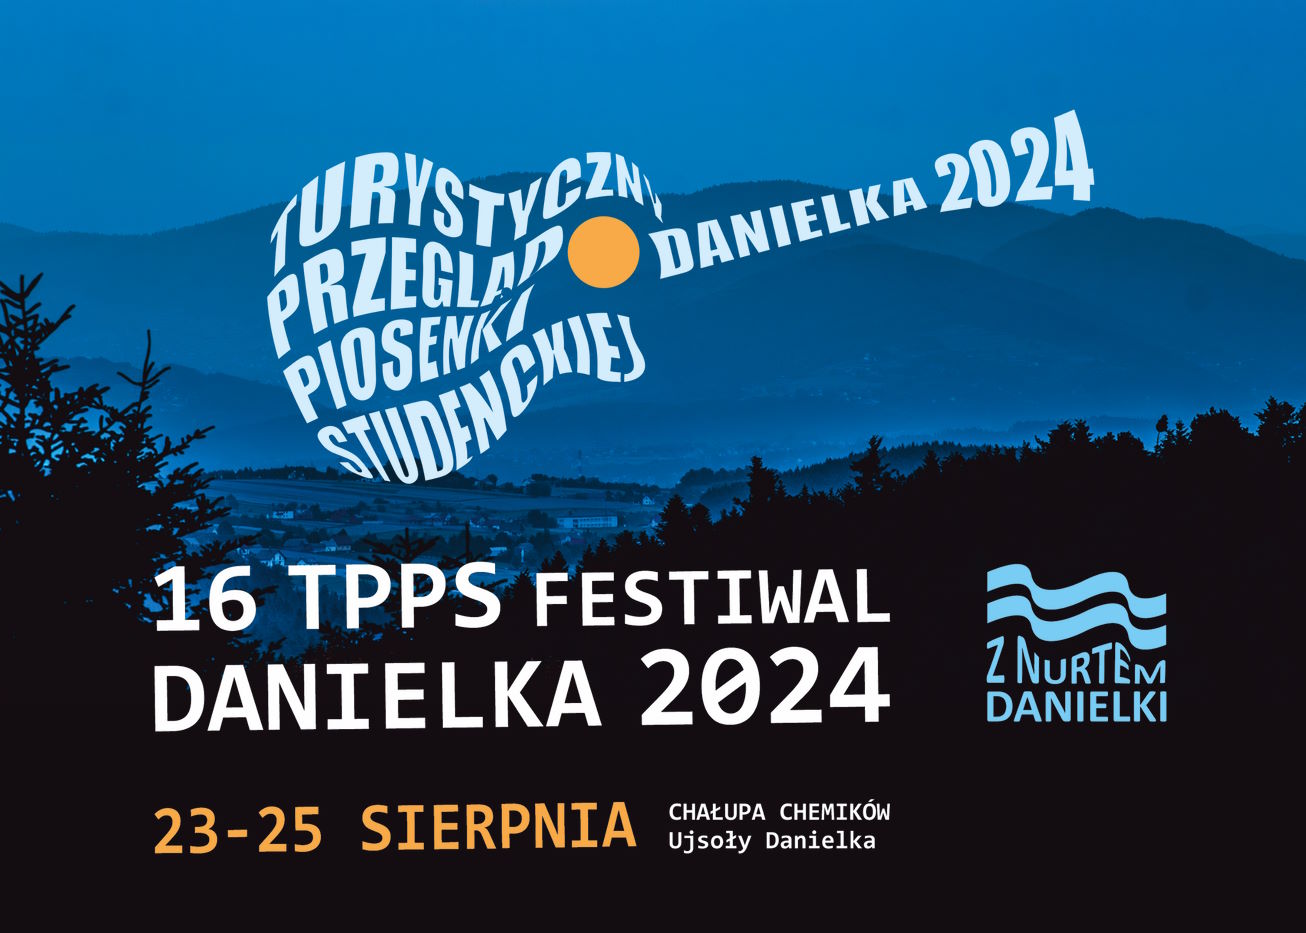 Festiwal Danielka 2024